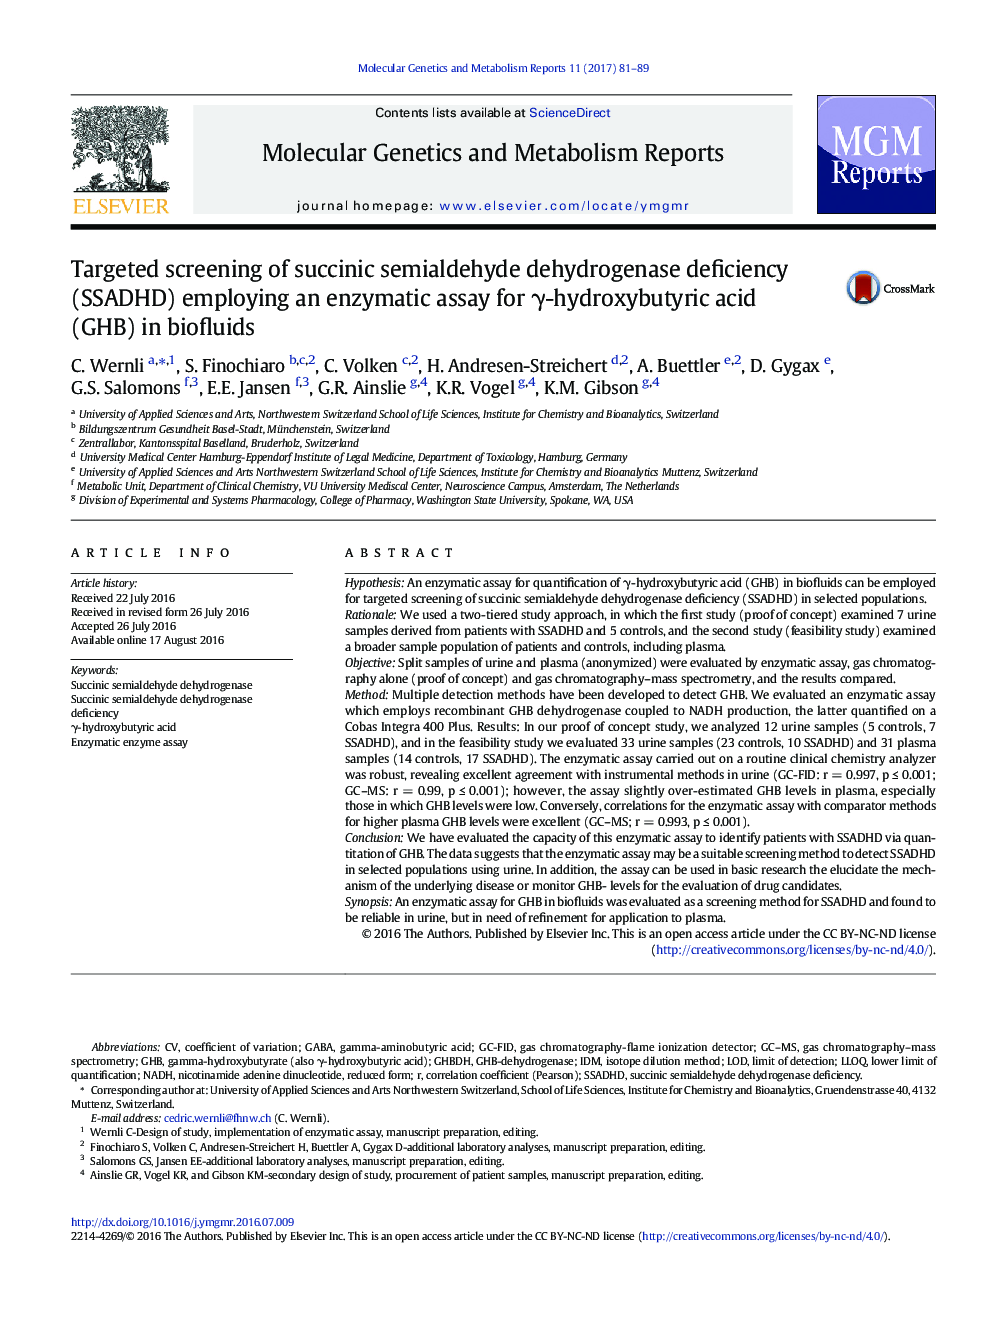 Targeted screening of succinic semialdehyde dehydrogenase deficiency (SSADHD) employing an enzymatic assay for Î³-hydroxybutyric acid (GHB) in biofluids